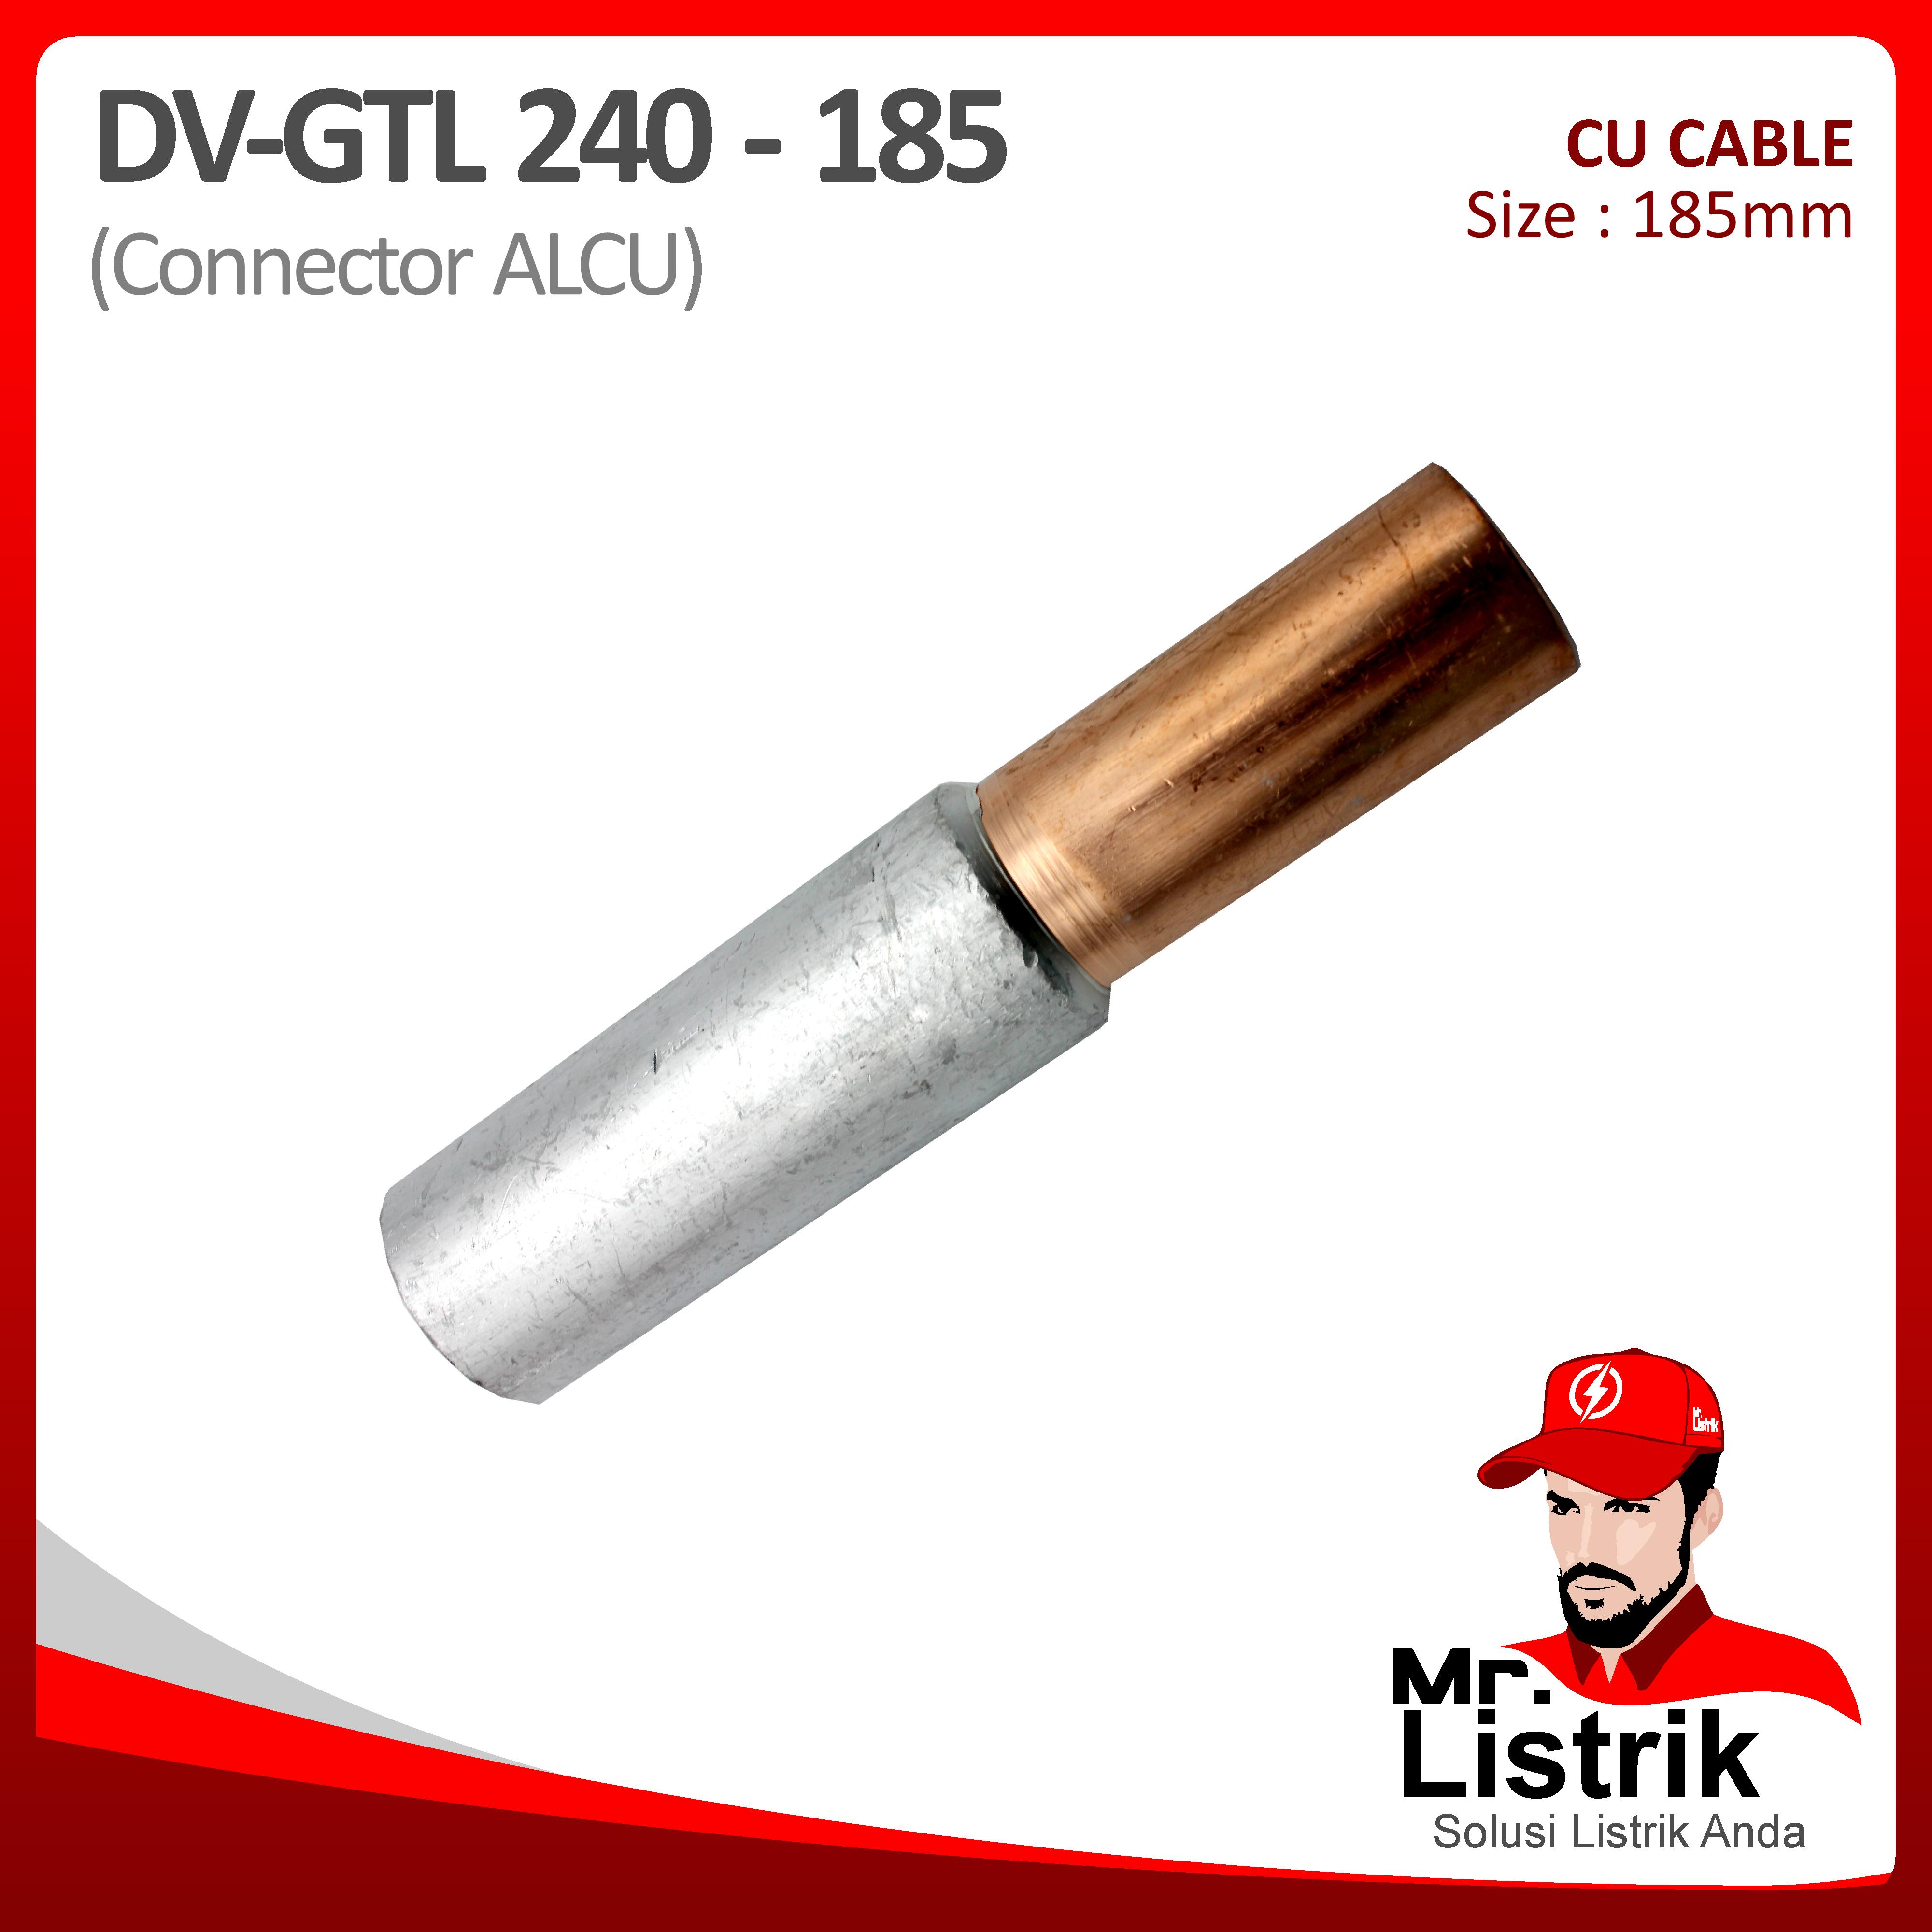 Connector ALCU 240mm DV GTL-240-185